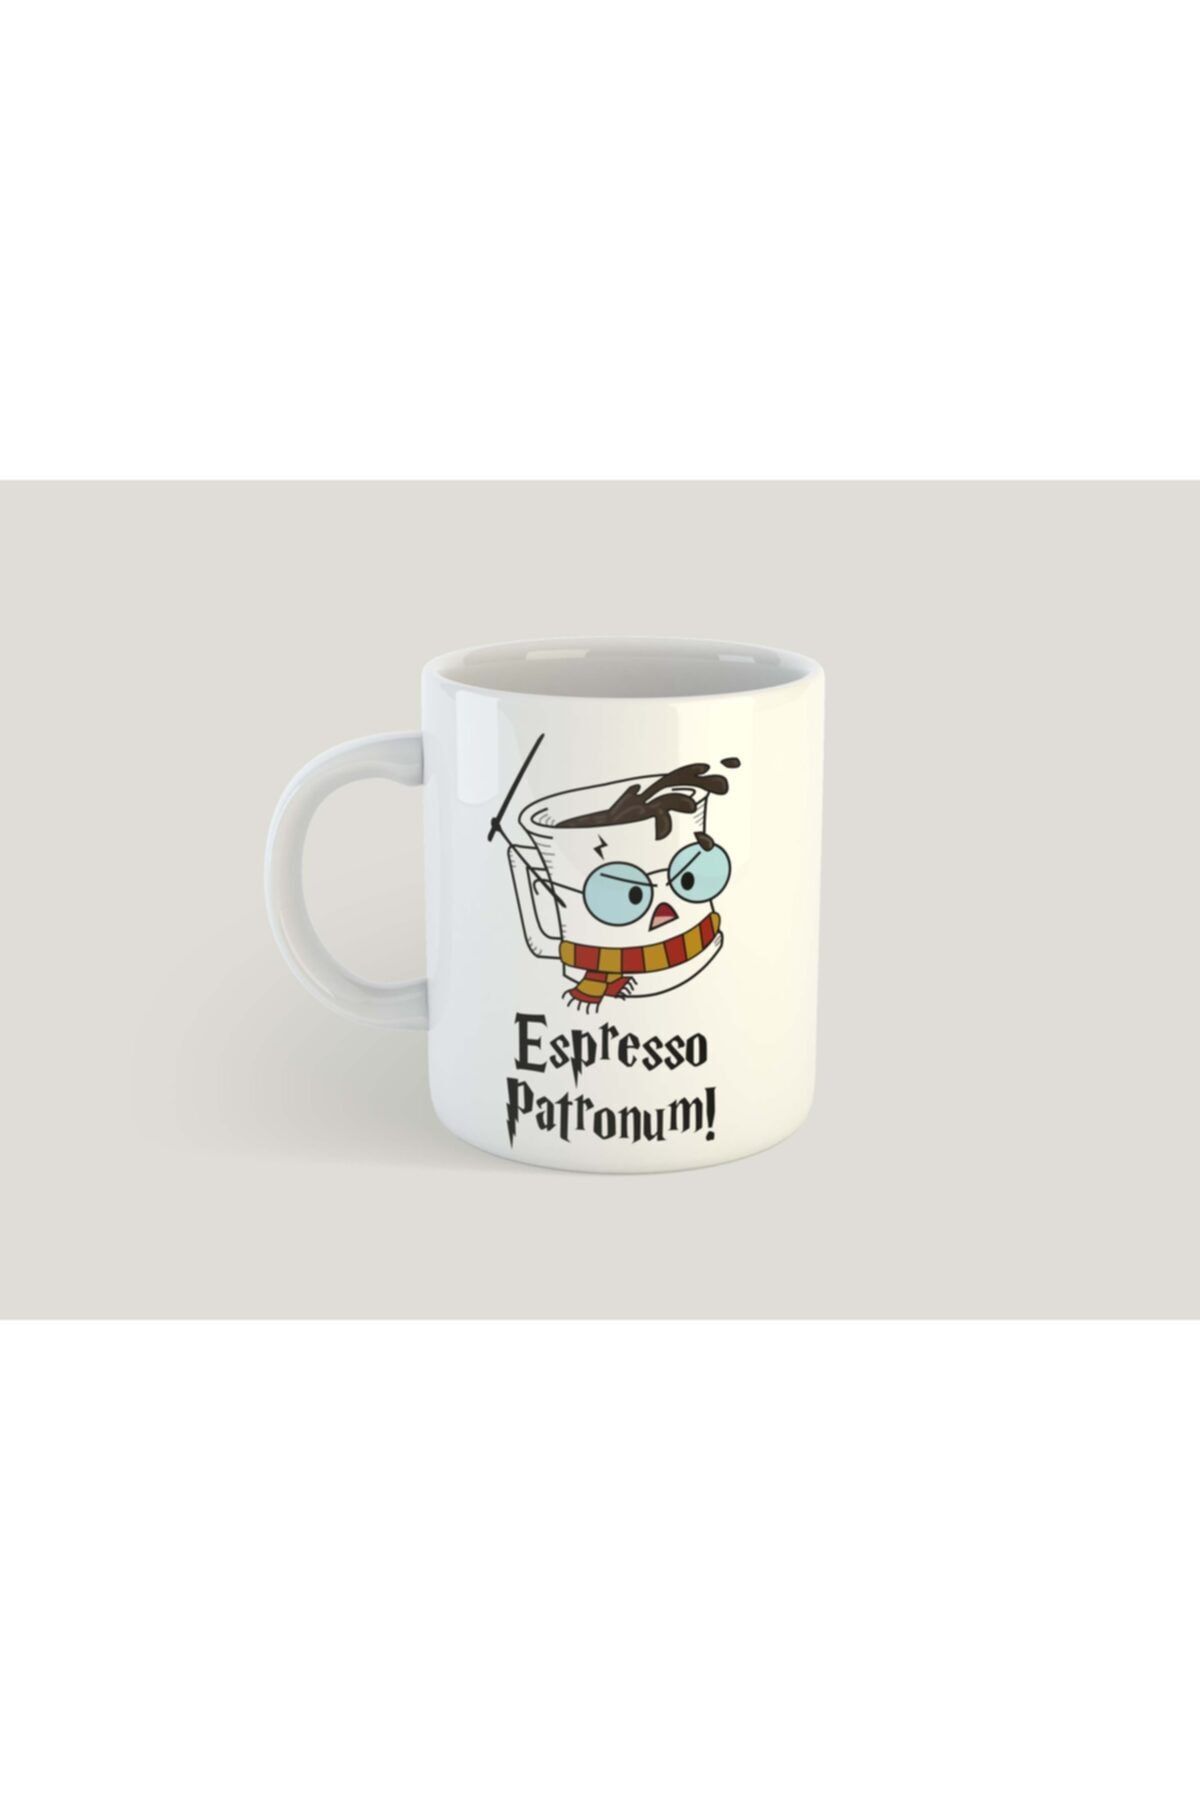 Marple's Porcelain - Harry Potter Espresso Patronum Mug. - Trendyol